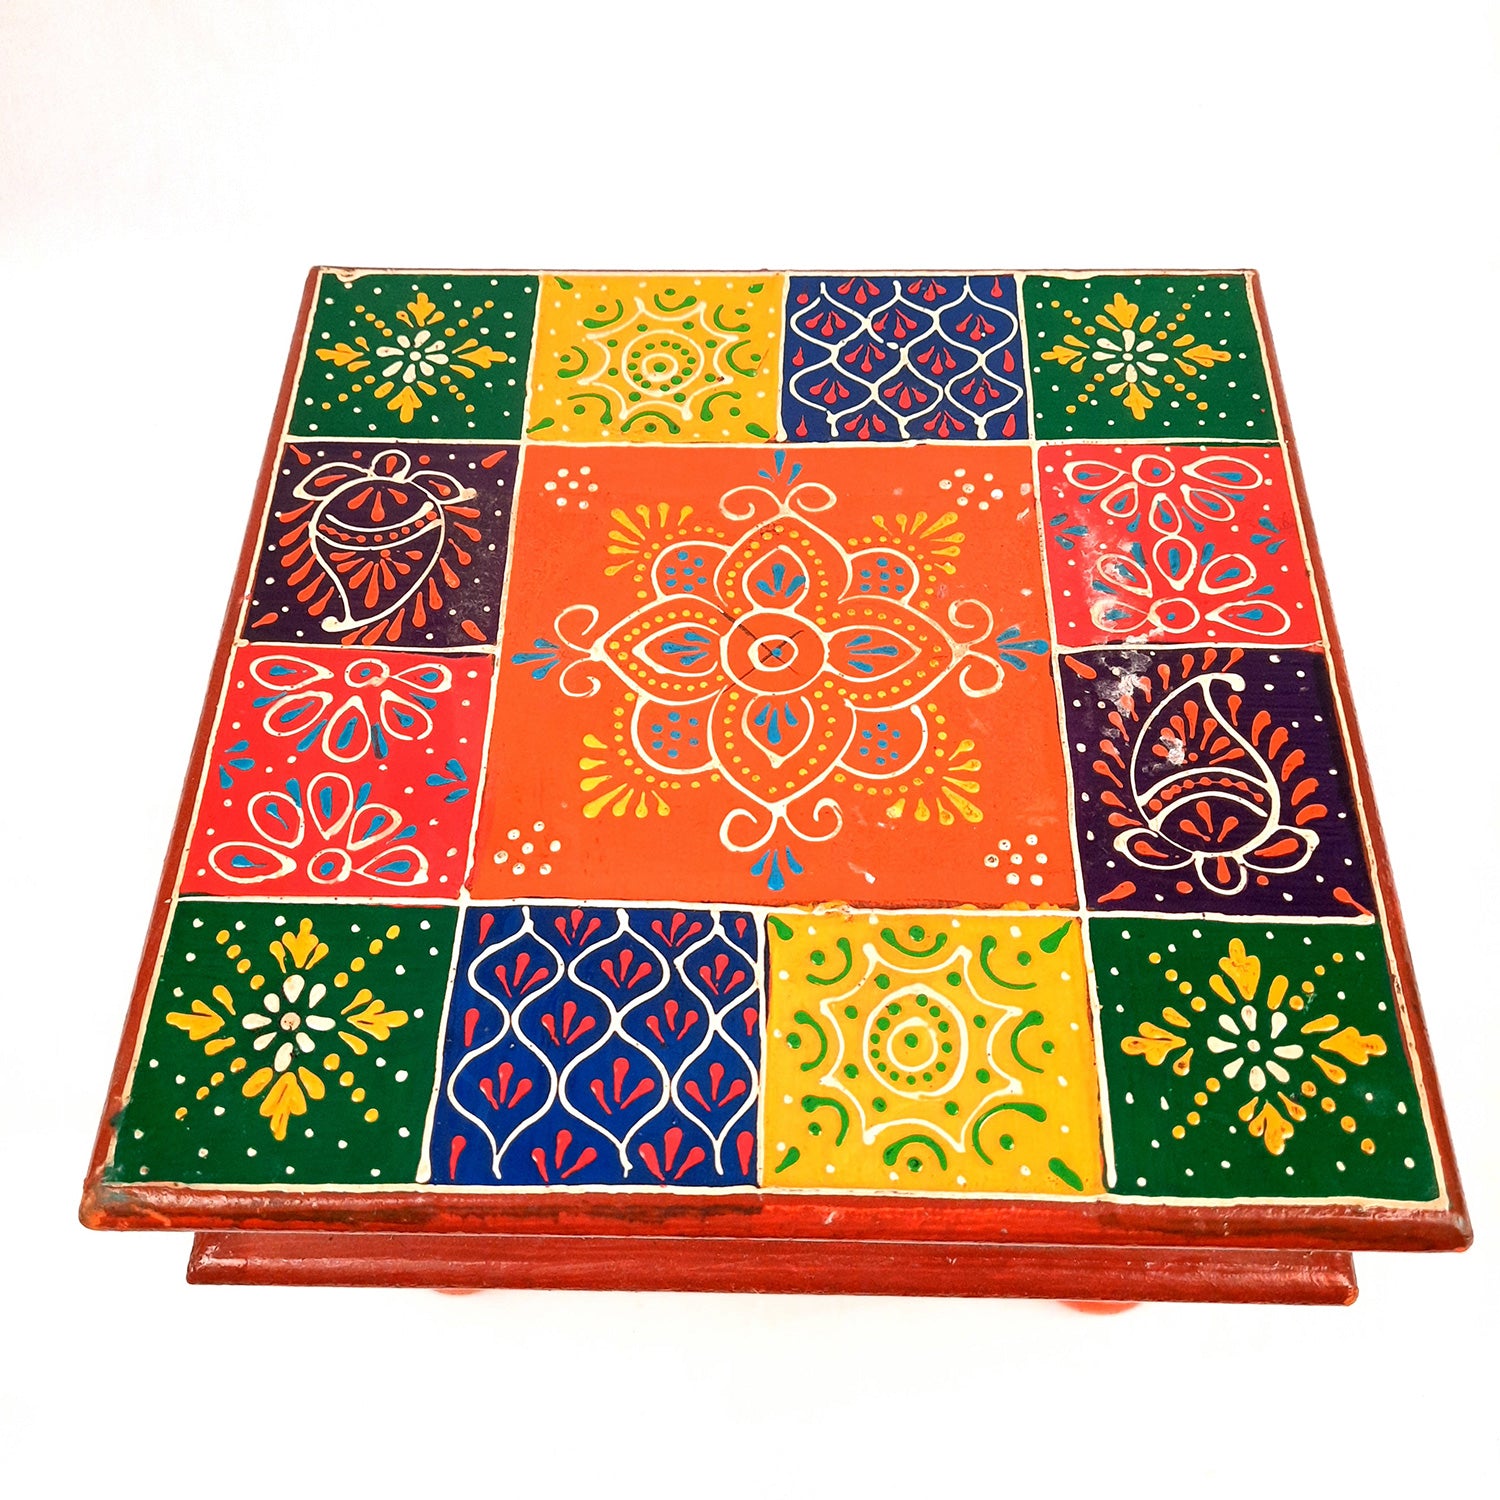 Puja Chowki Bajot| Wooden Chauki For Sitting | Peeta / Patla - For Home, living Room, Corner, Mandir Decoration & Gifts - 10 Inch - apkamart